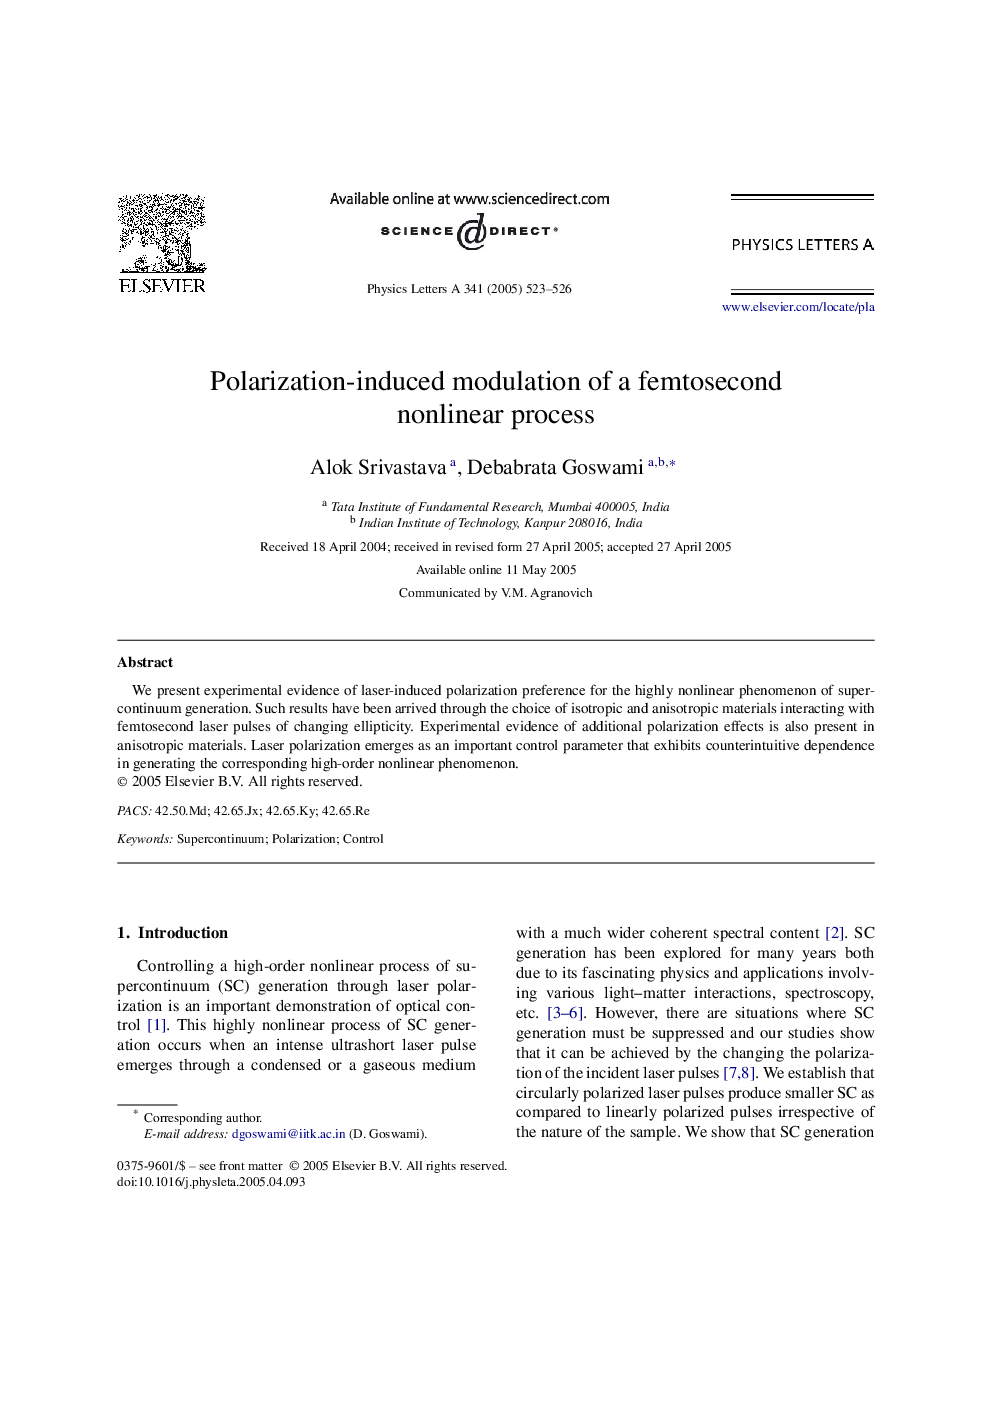 Polarization-induced modulation of a femtosecond nonlinear process